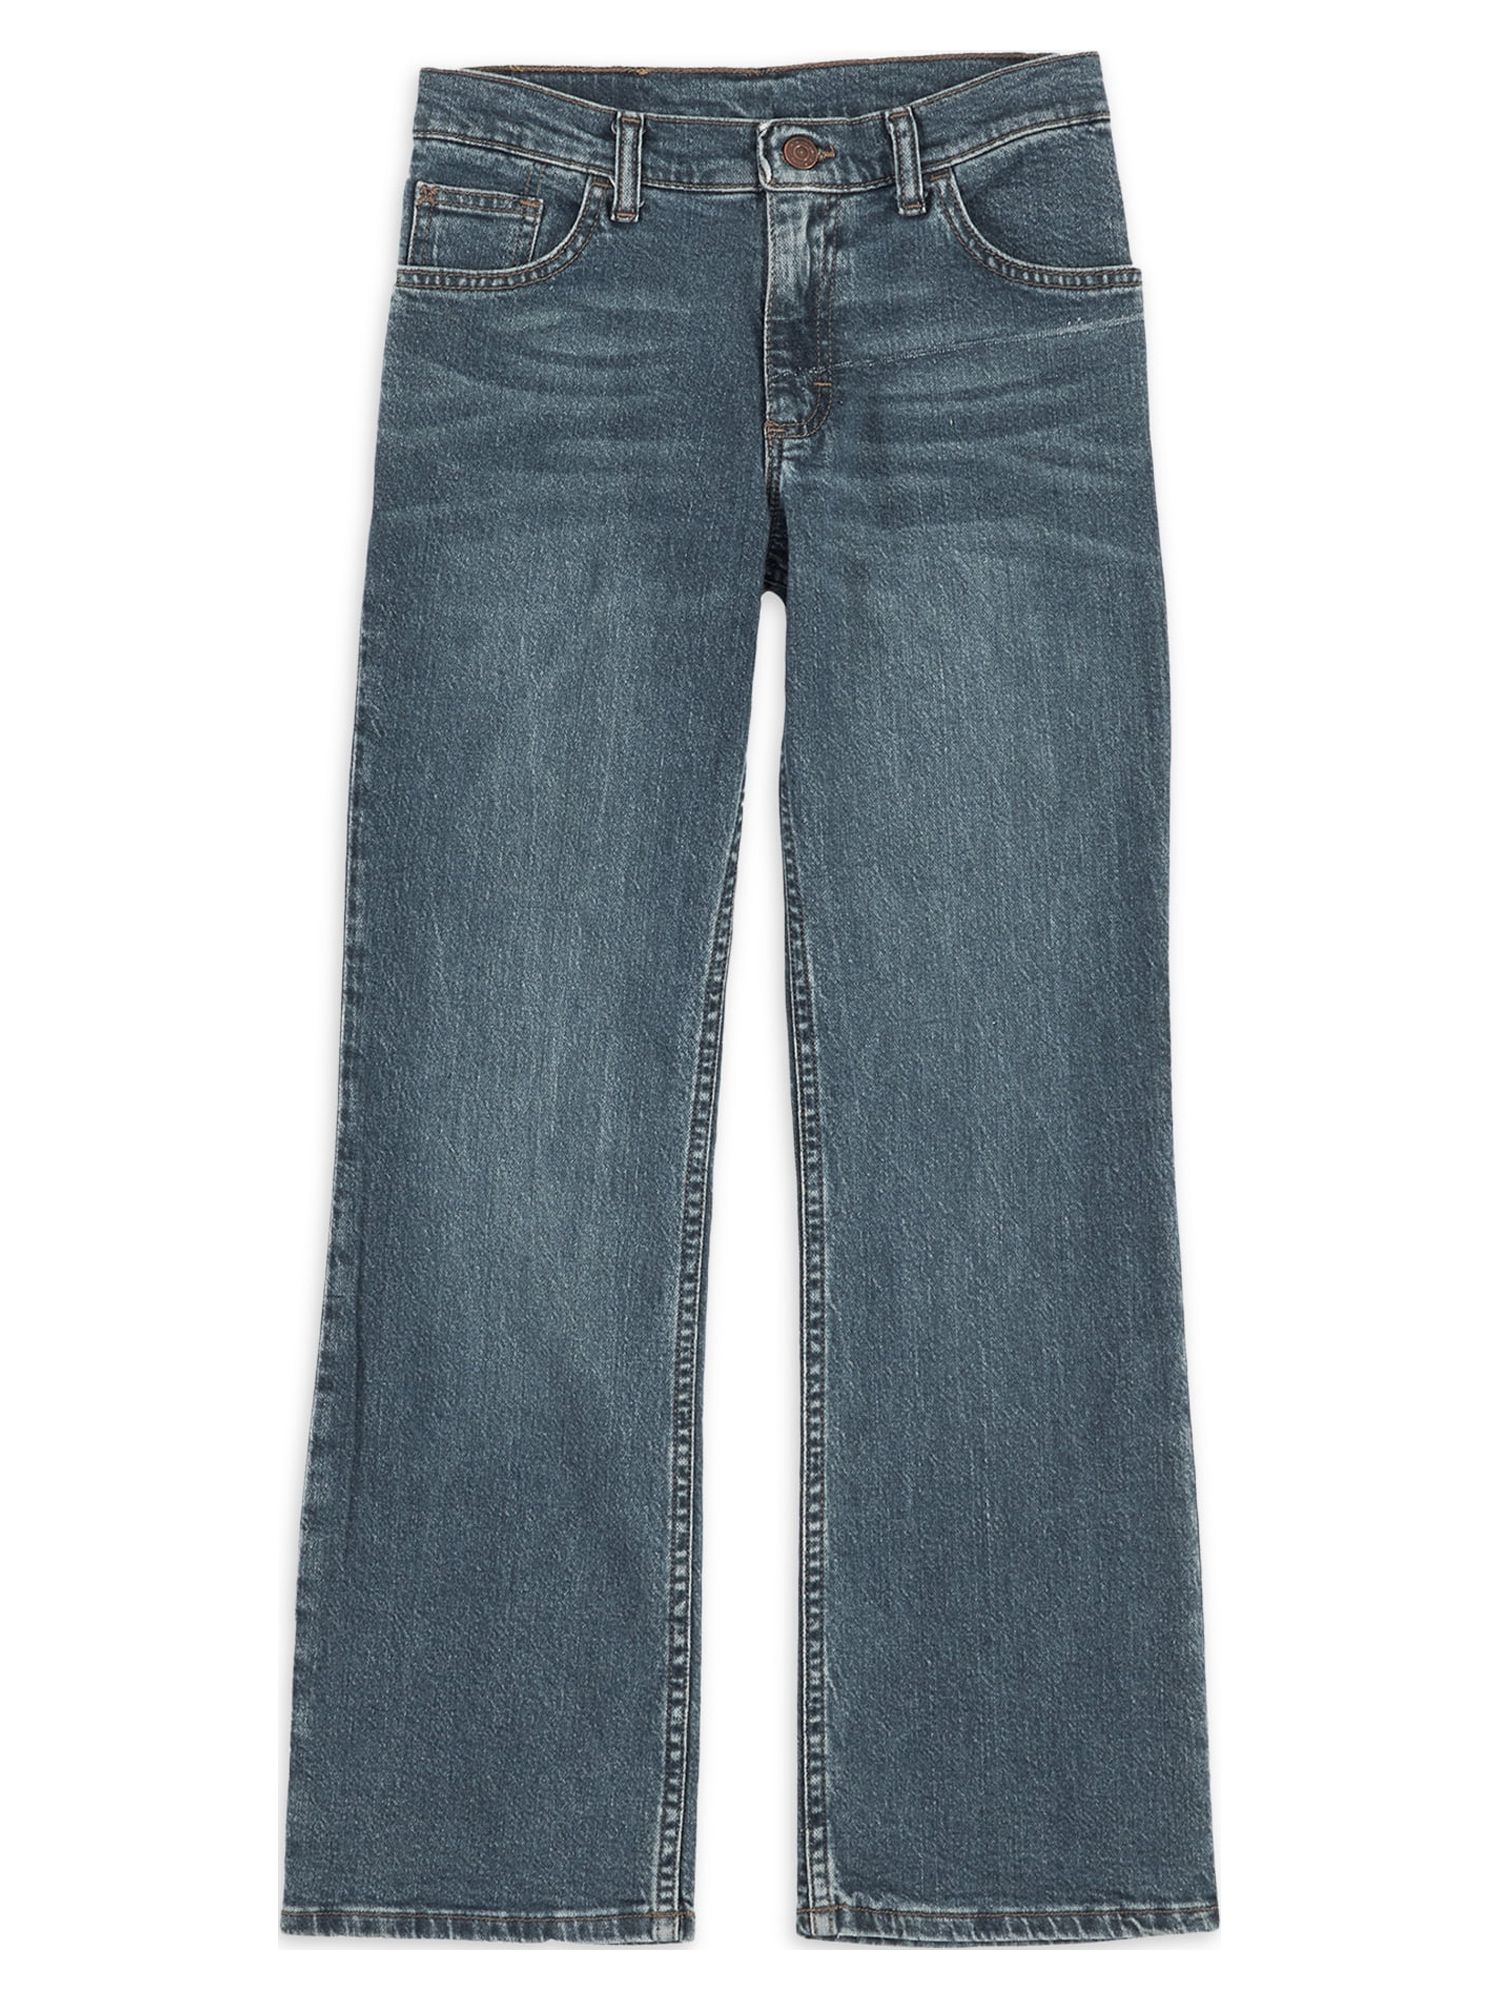 Wrangler Boys Bootcut Denim Jeans, Sizes 4-18 & Husky - Walmart.com